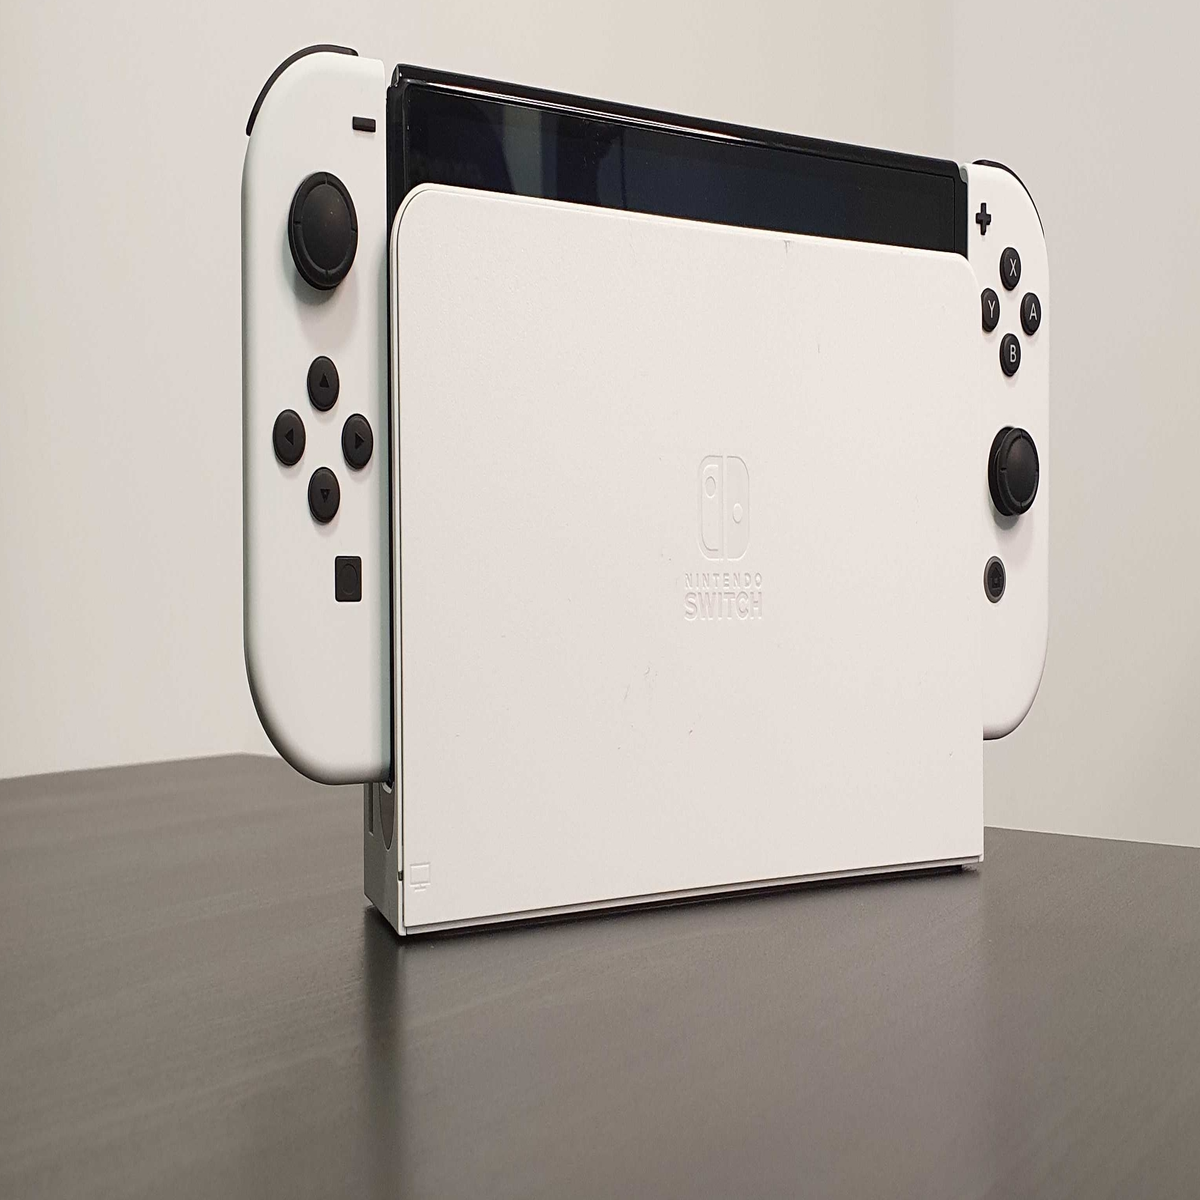 Nintendo Switch OLED White (Novo Modelo) + Acessórios + 1 Jogo